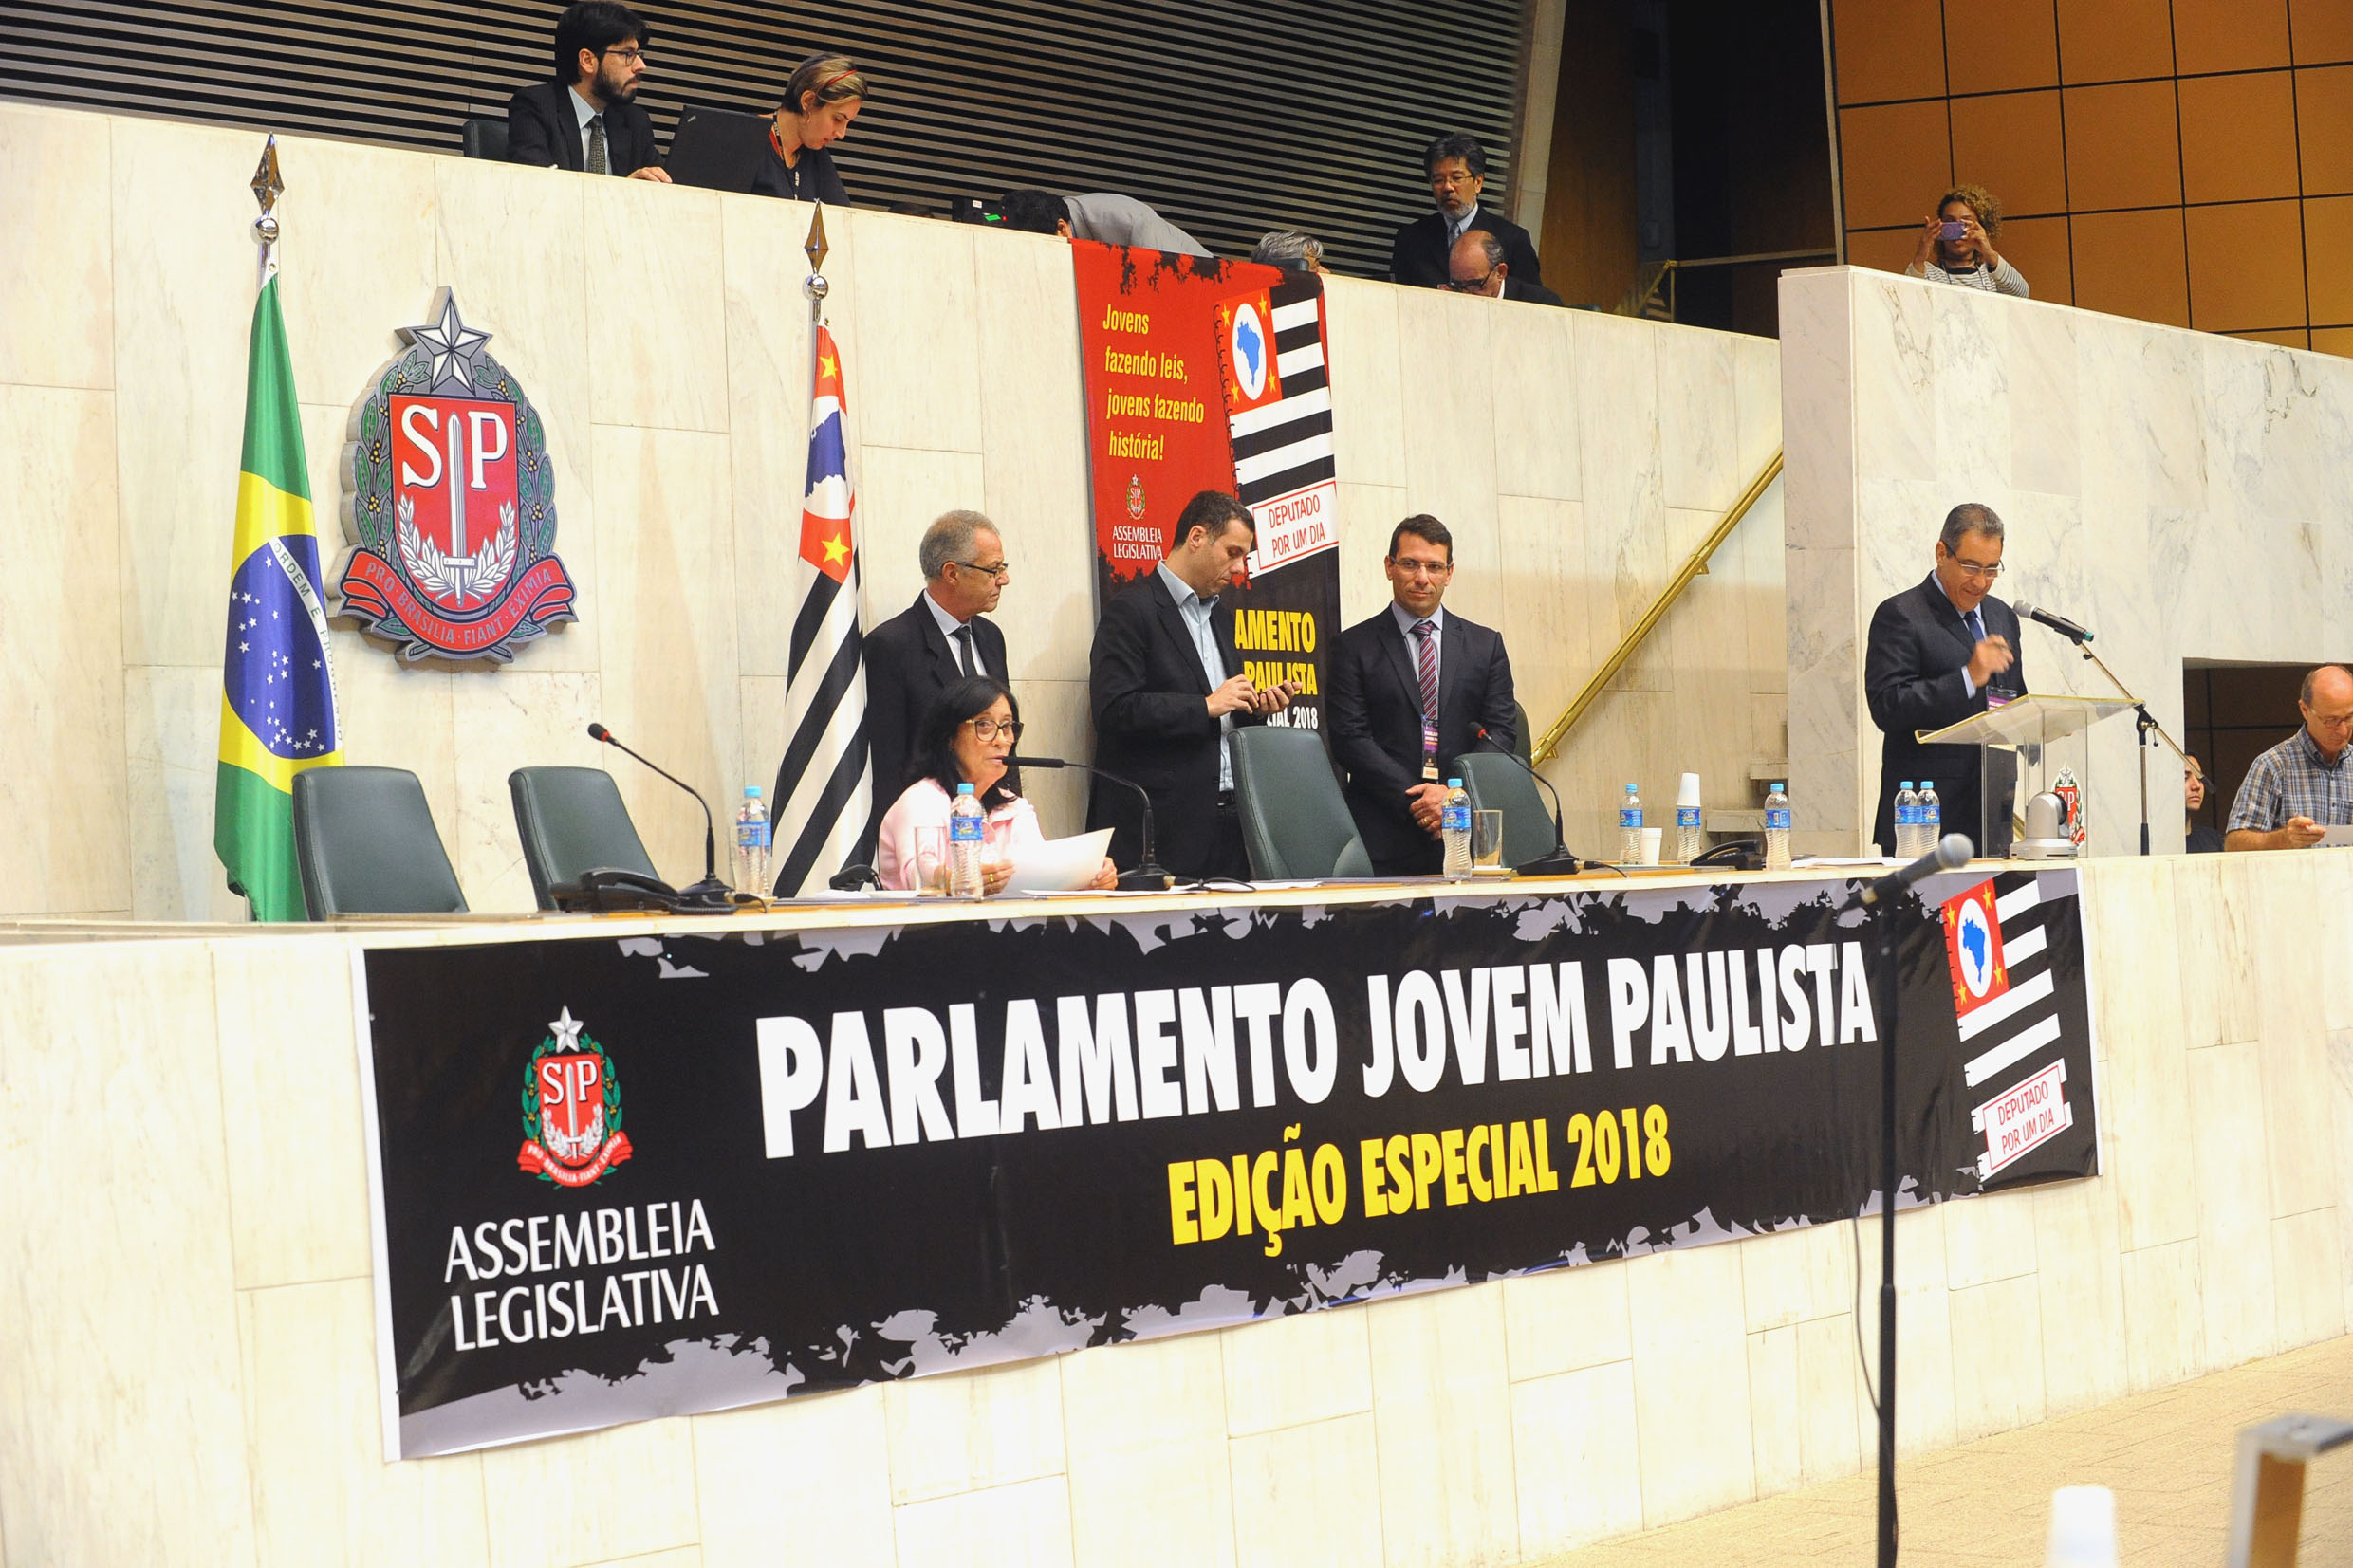 Parlamento Jovem Paulista <a style='float:right;color:#ccc' href='https://www3.al.sp.gov.br/repositorio/noticia/N-04-2018/fg222130.jpg' target=_blank><i class='bi bi-zoom-in'></i> Clique para ver a imagem </a>